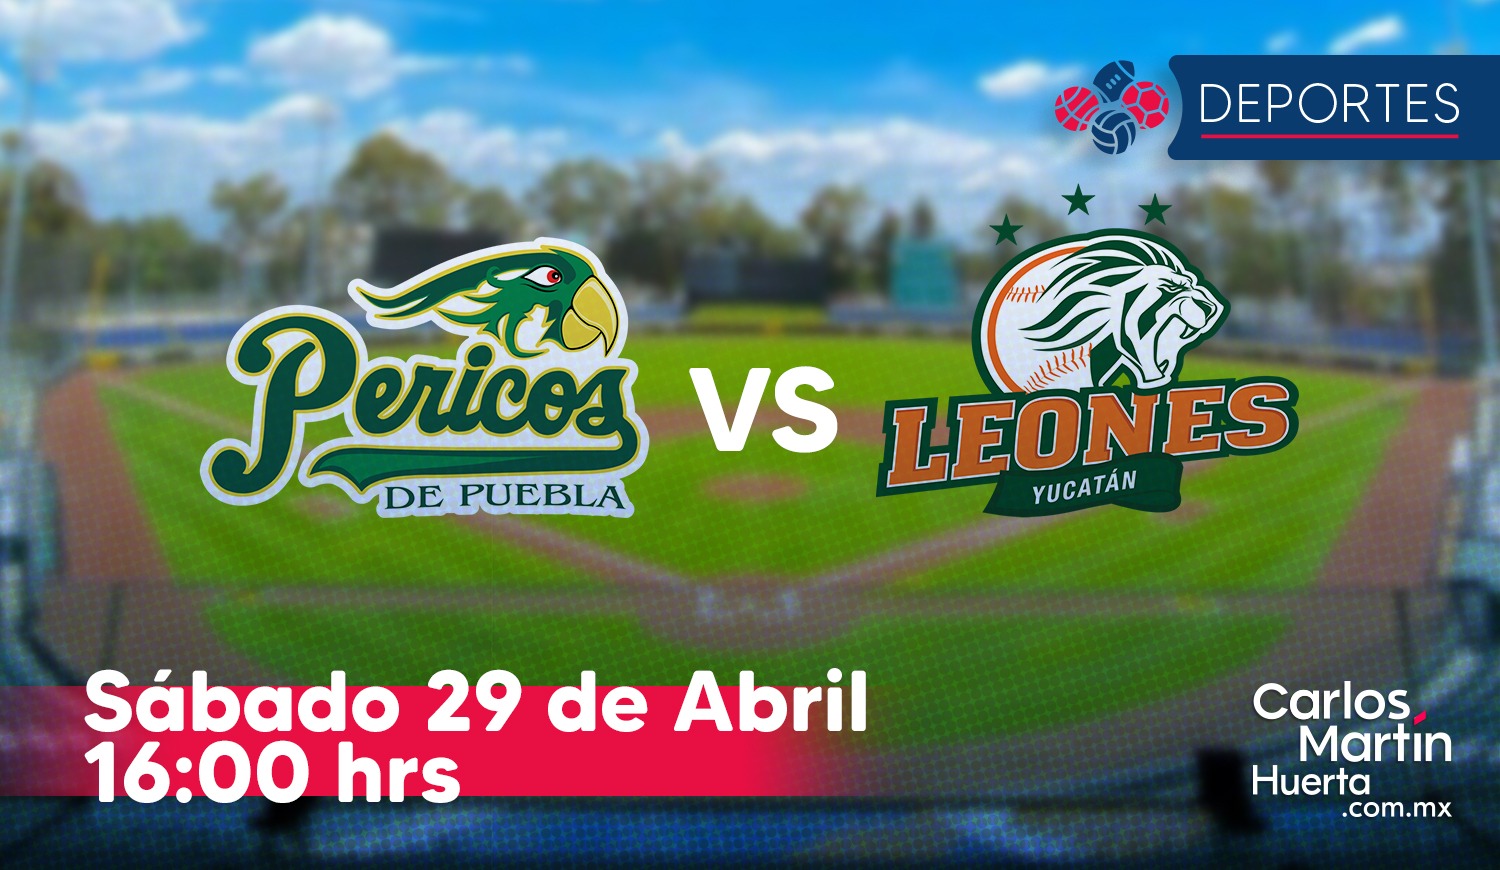 Se cancela juego Pericos vs Leones para hoy; se reprograma para mañana -  Carlos Martin Huerta